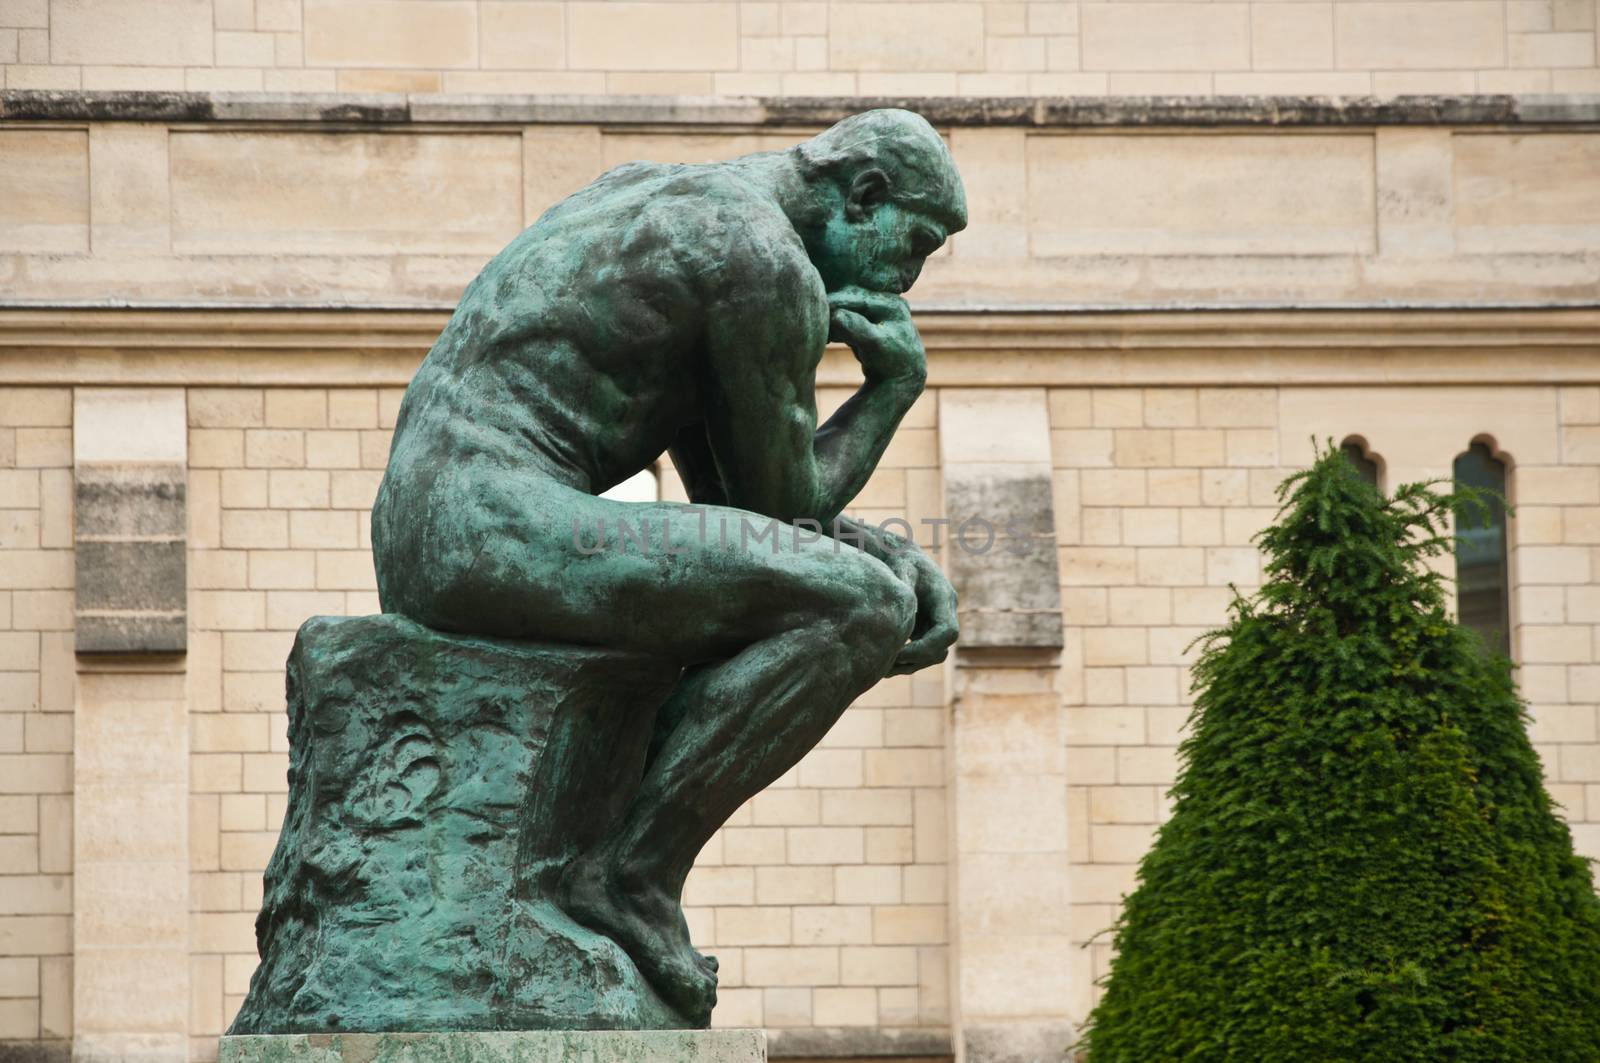 the thinking in Rodin museum in Paris - taken 14 June 2013 by NeydtStock